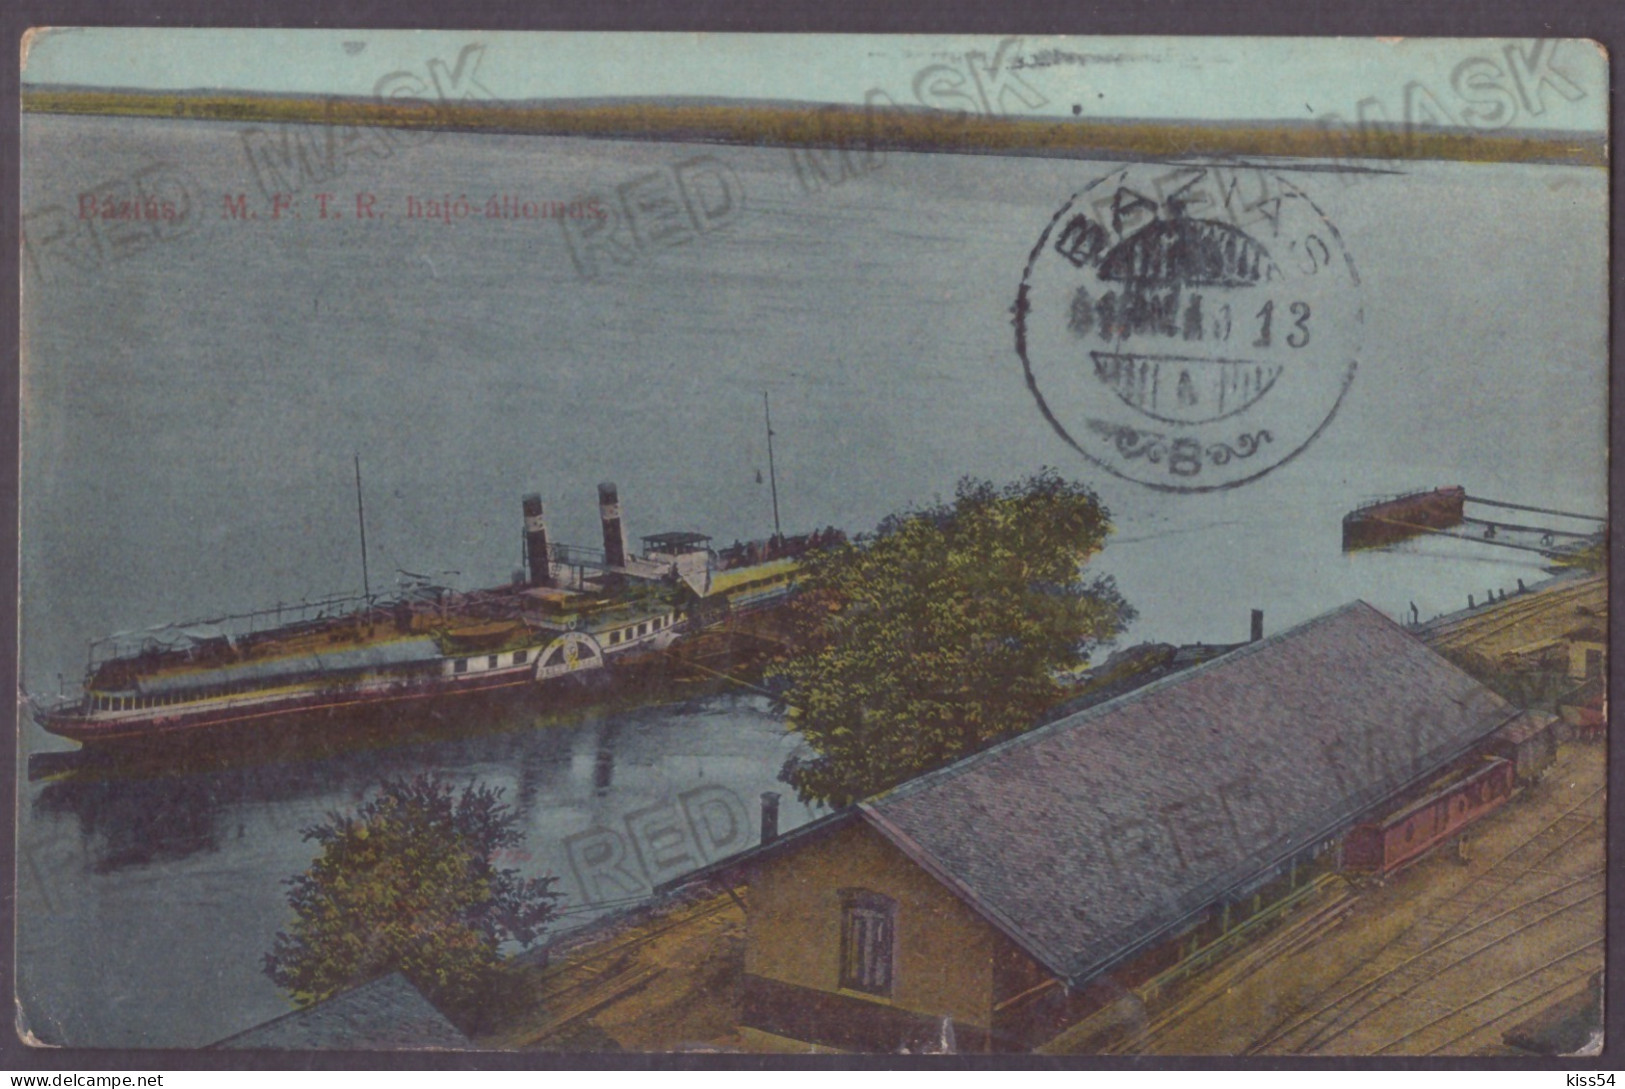 RO 40 - 23121 BAZIAS, Caras-Severin, Railway & Ship, Romania - Old Postcard - Used - 1913 - Rumänien